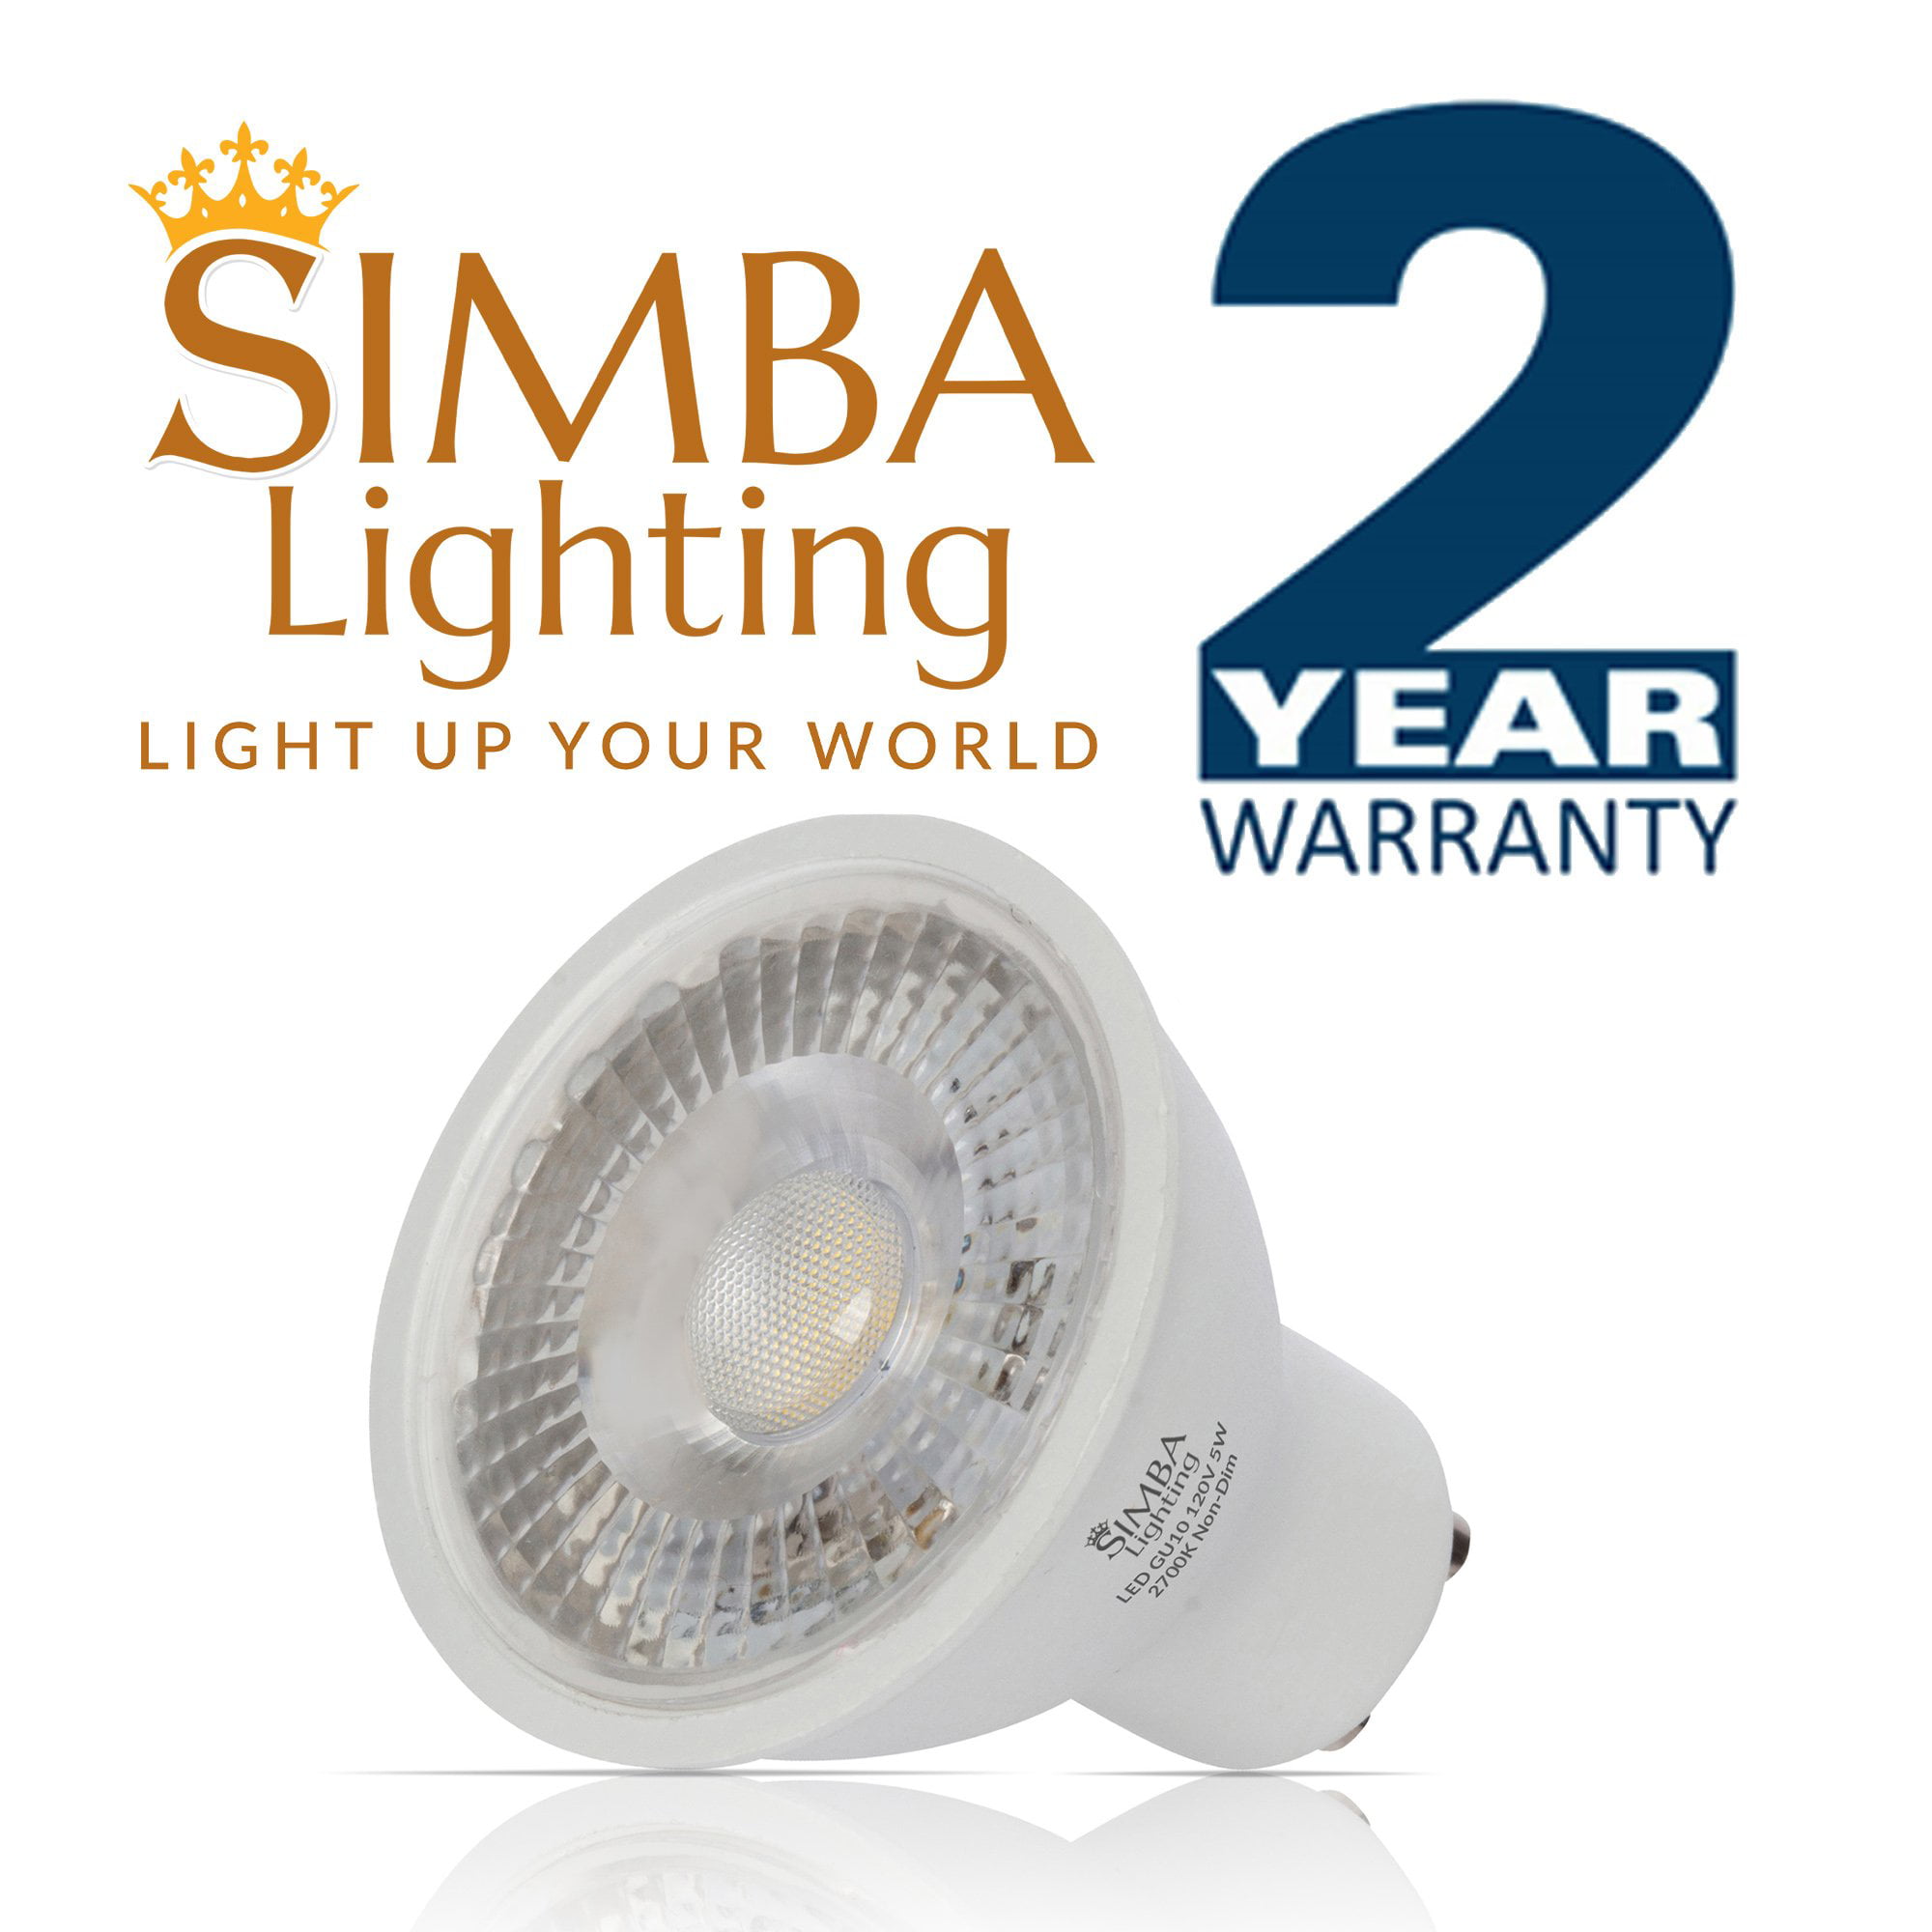 Simba Lighting LED GU10 Twist 2700K Spot 5W 50W Replacement 120V 6-Pack Light Non-Dimmable Bulb Base